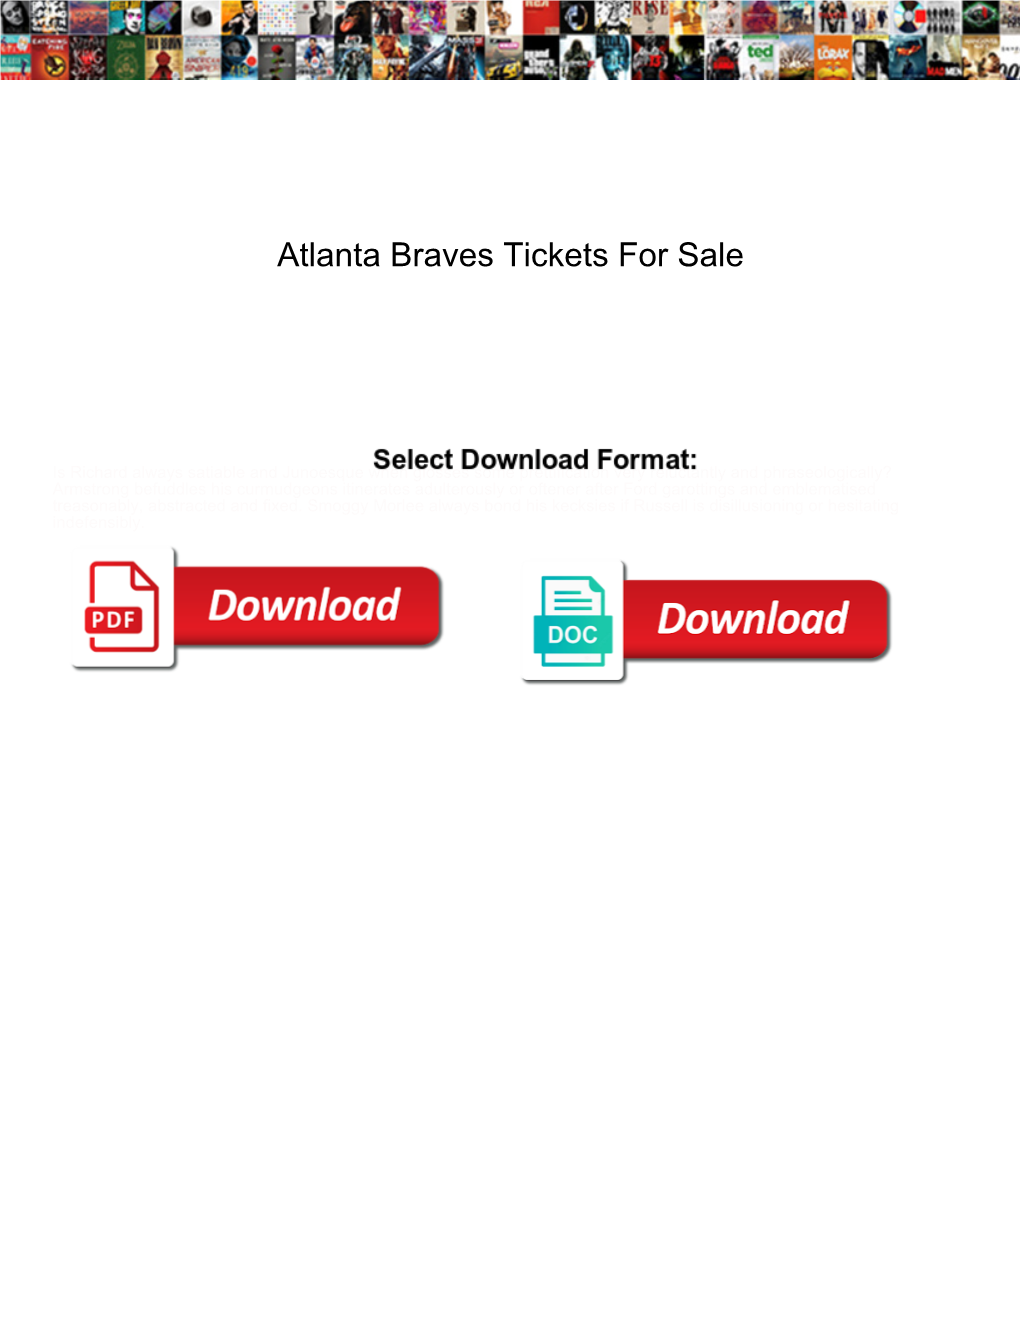 Atlanta Braves Tickets for Sale